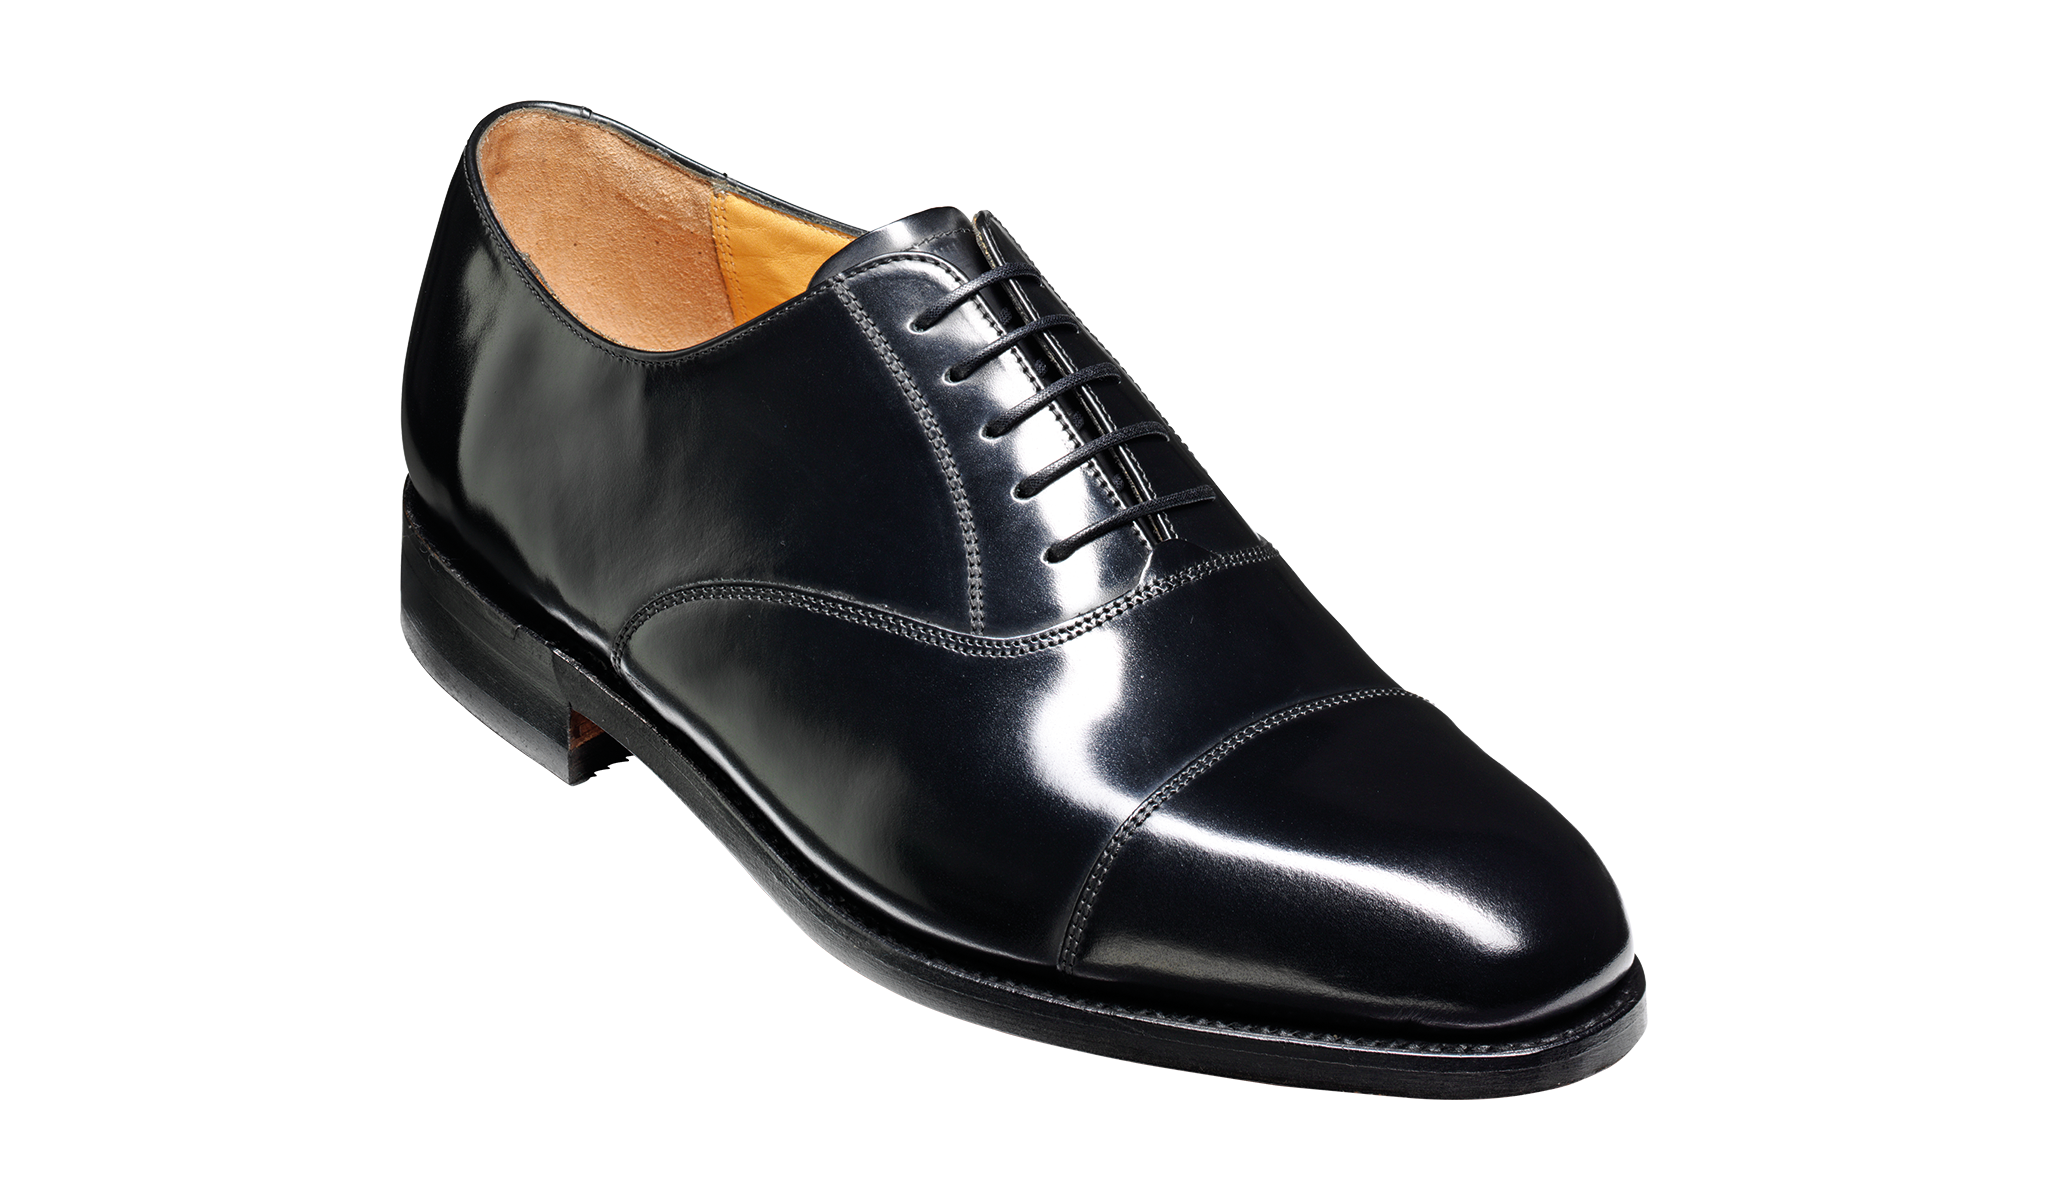 Arnold - A black men's oxford shoe from barker.